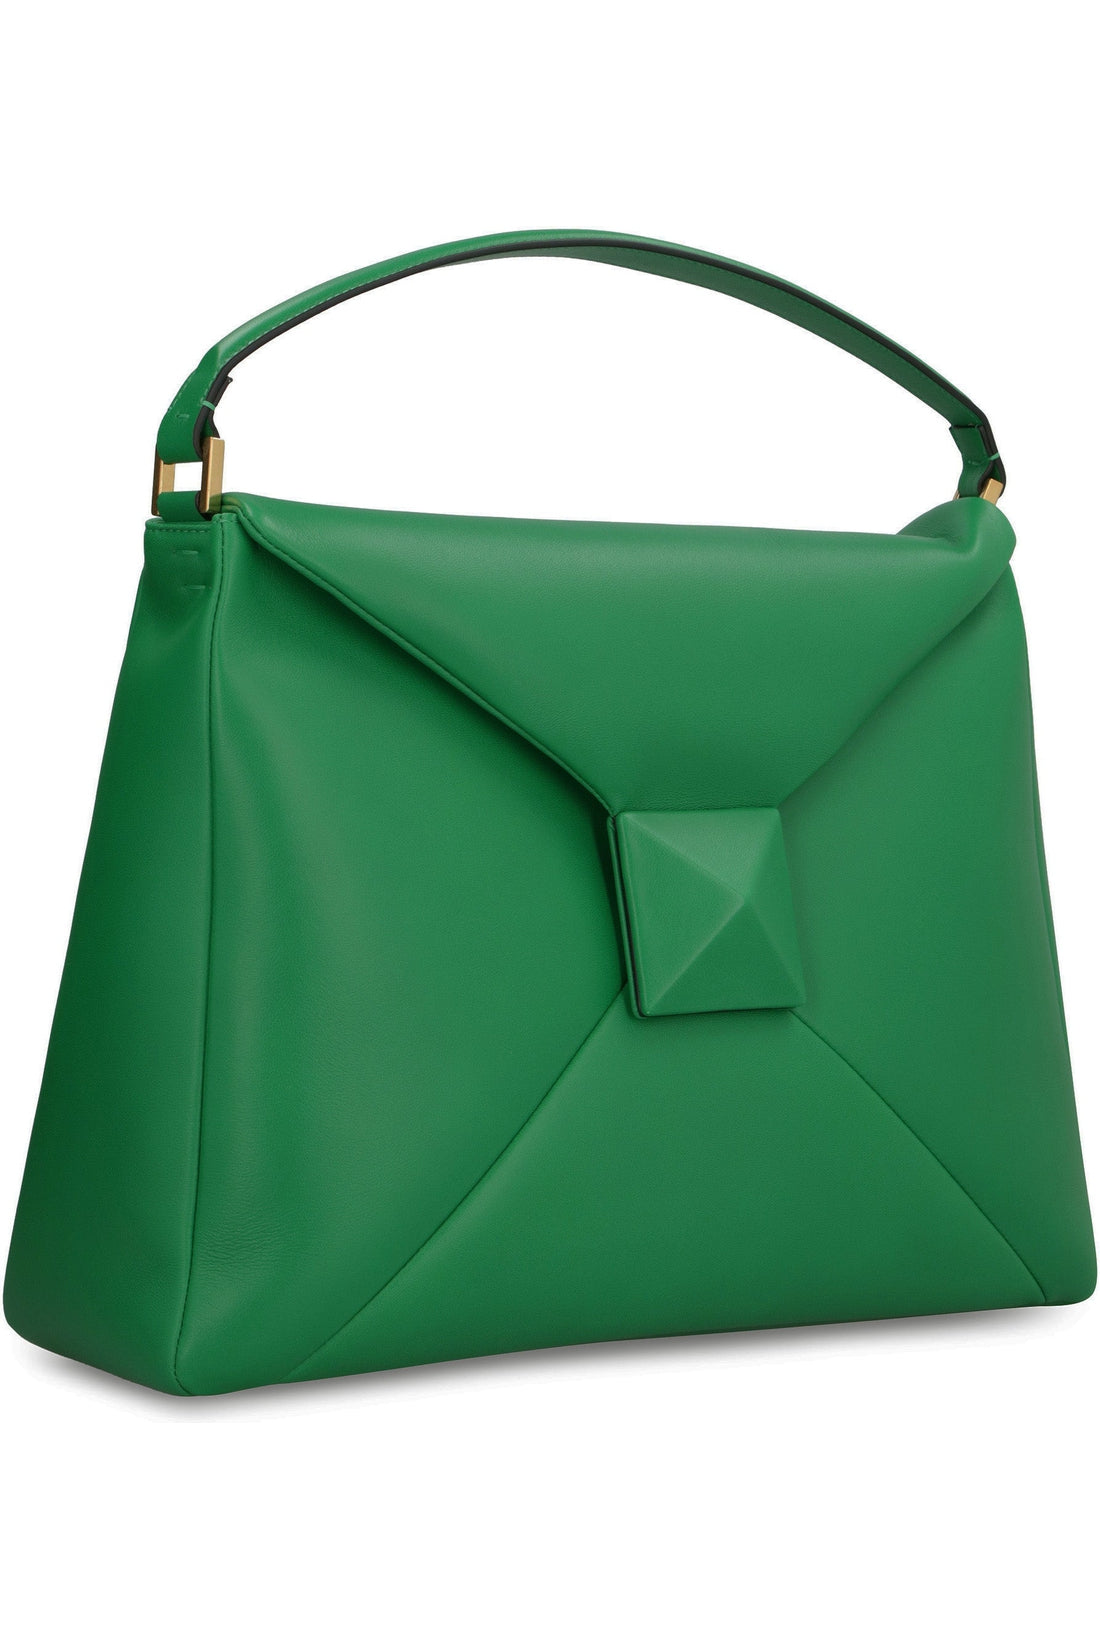 Valentino-OUTLET-SALE-Valentino Garavani - One Stud leather handbag-ARCHIVIST